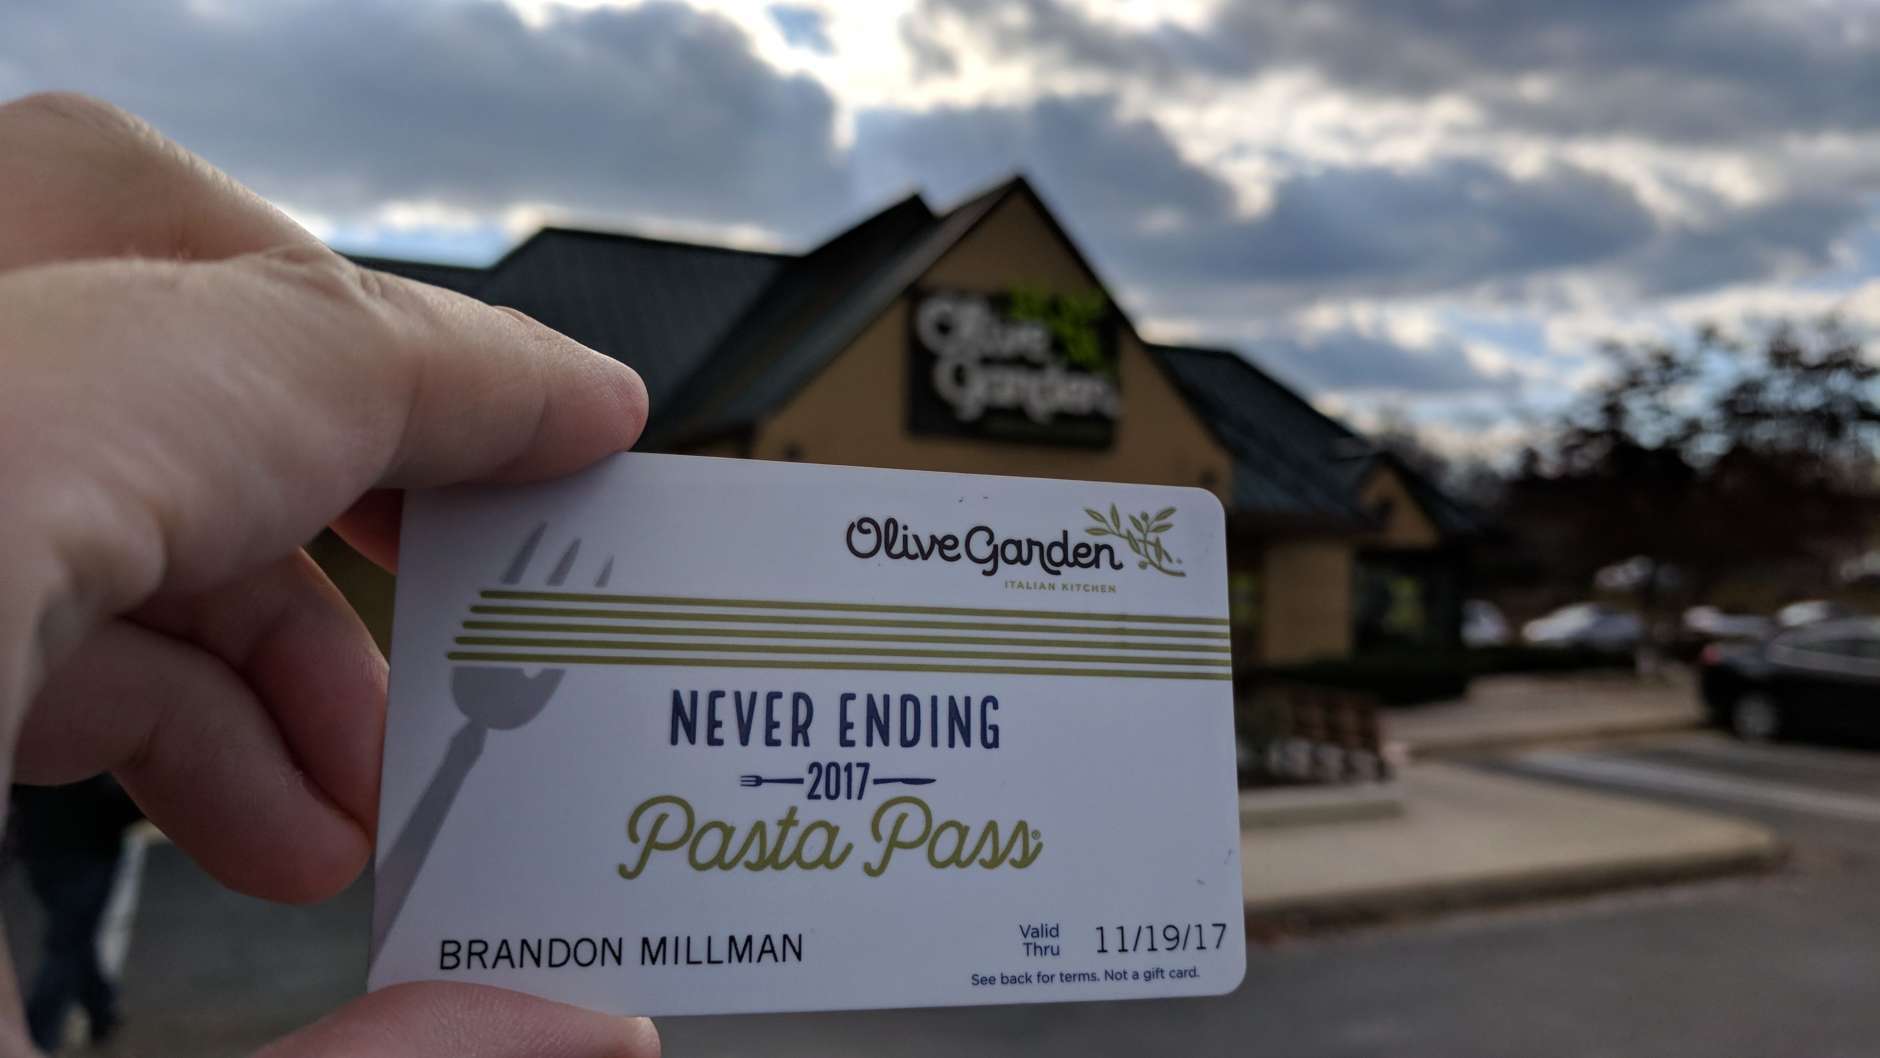 The Olive Garden in Columbia. (WTOP/Brandon Millman)